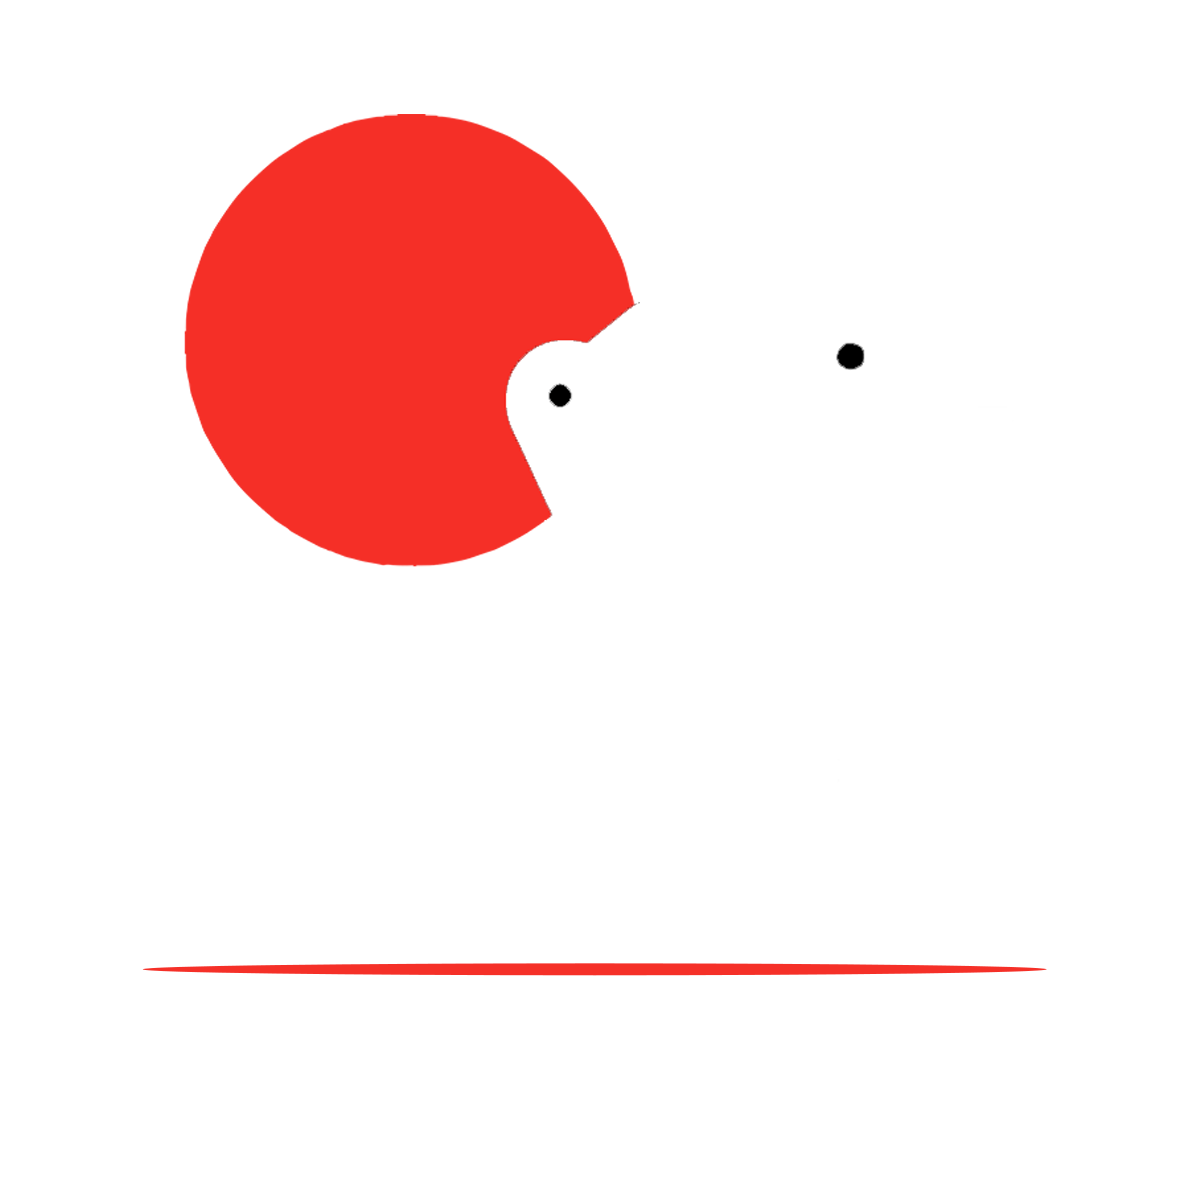 Peli Productions